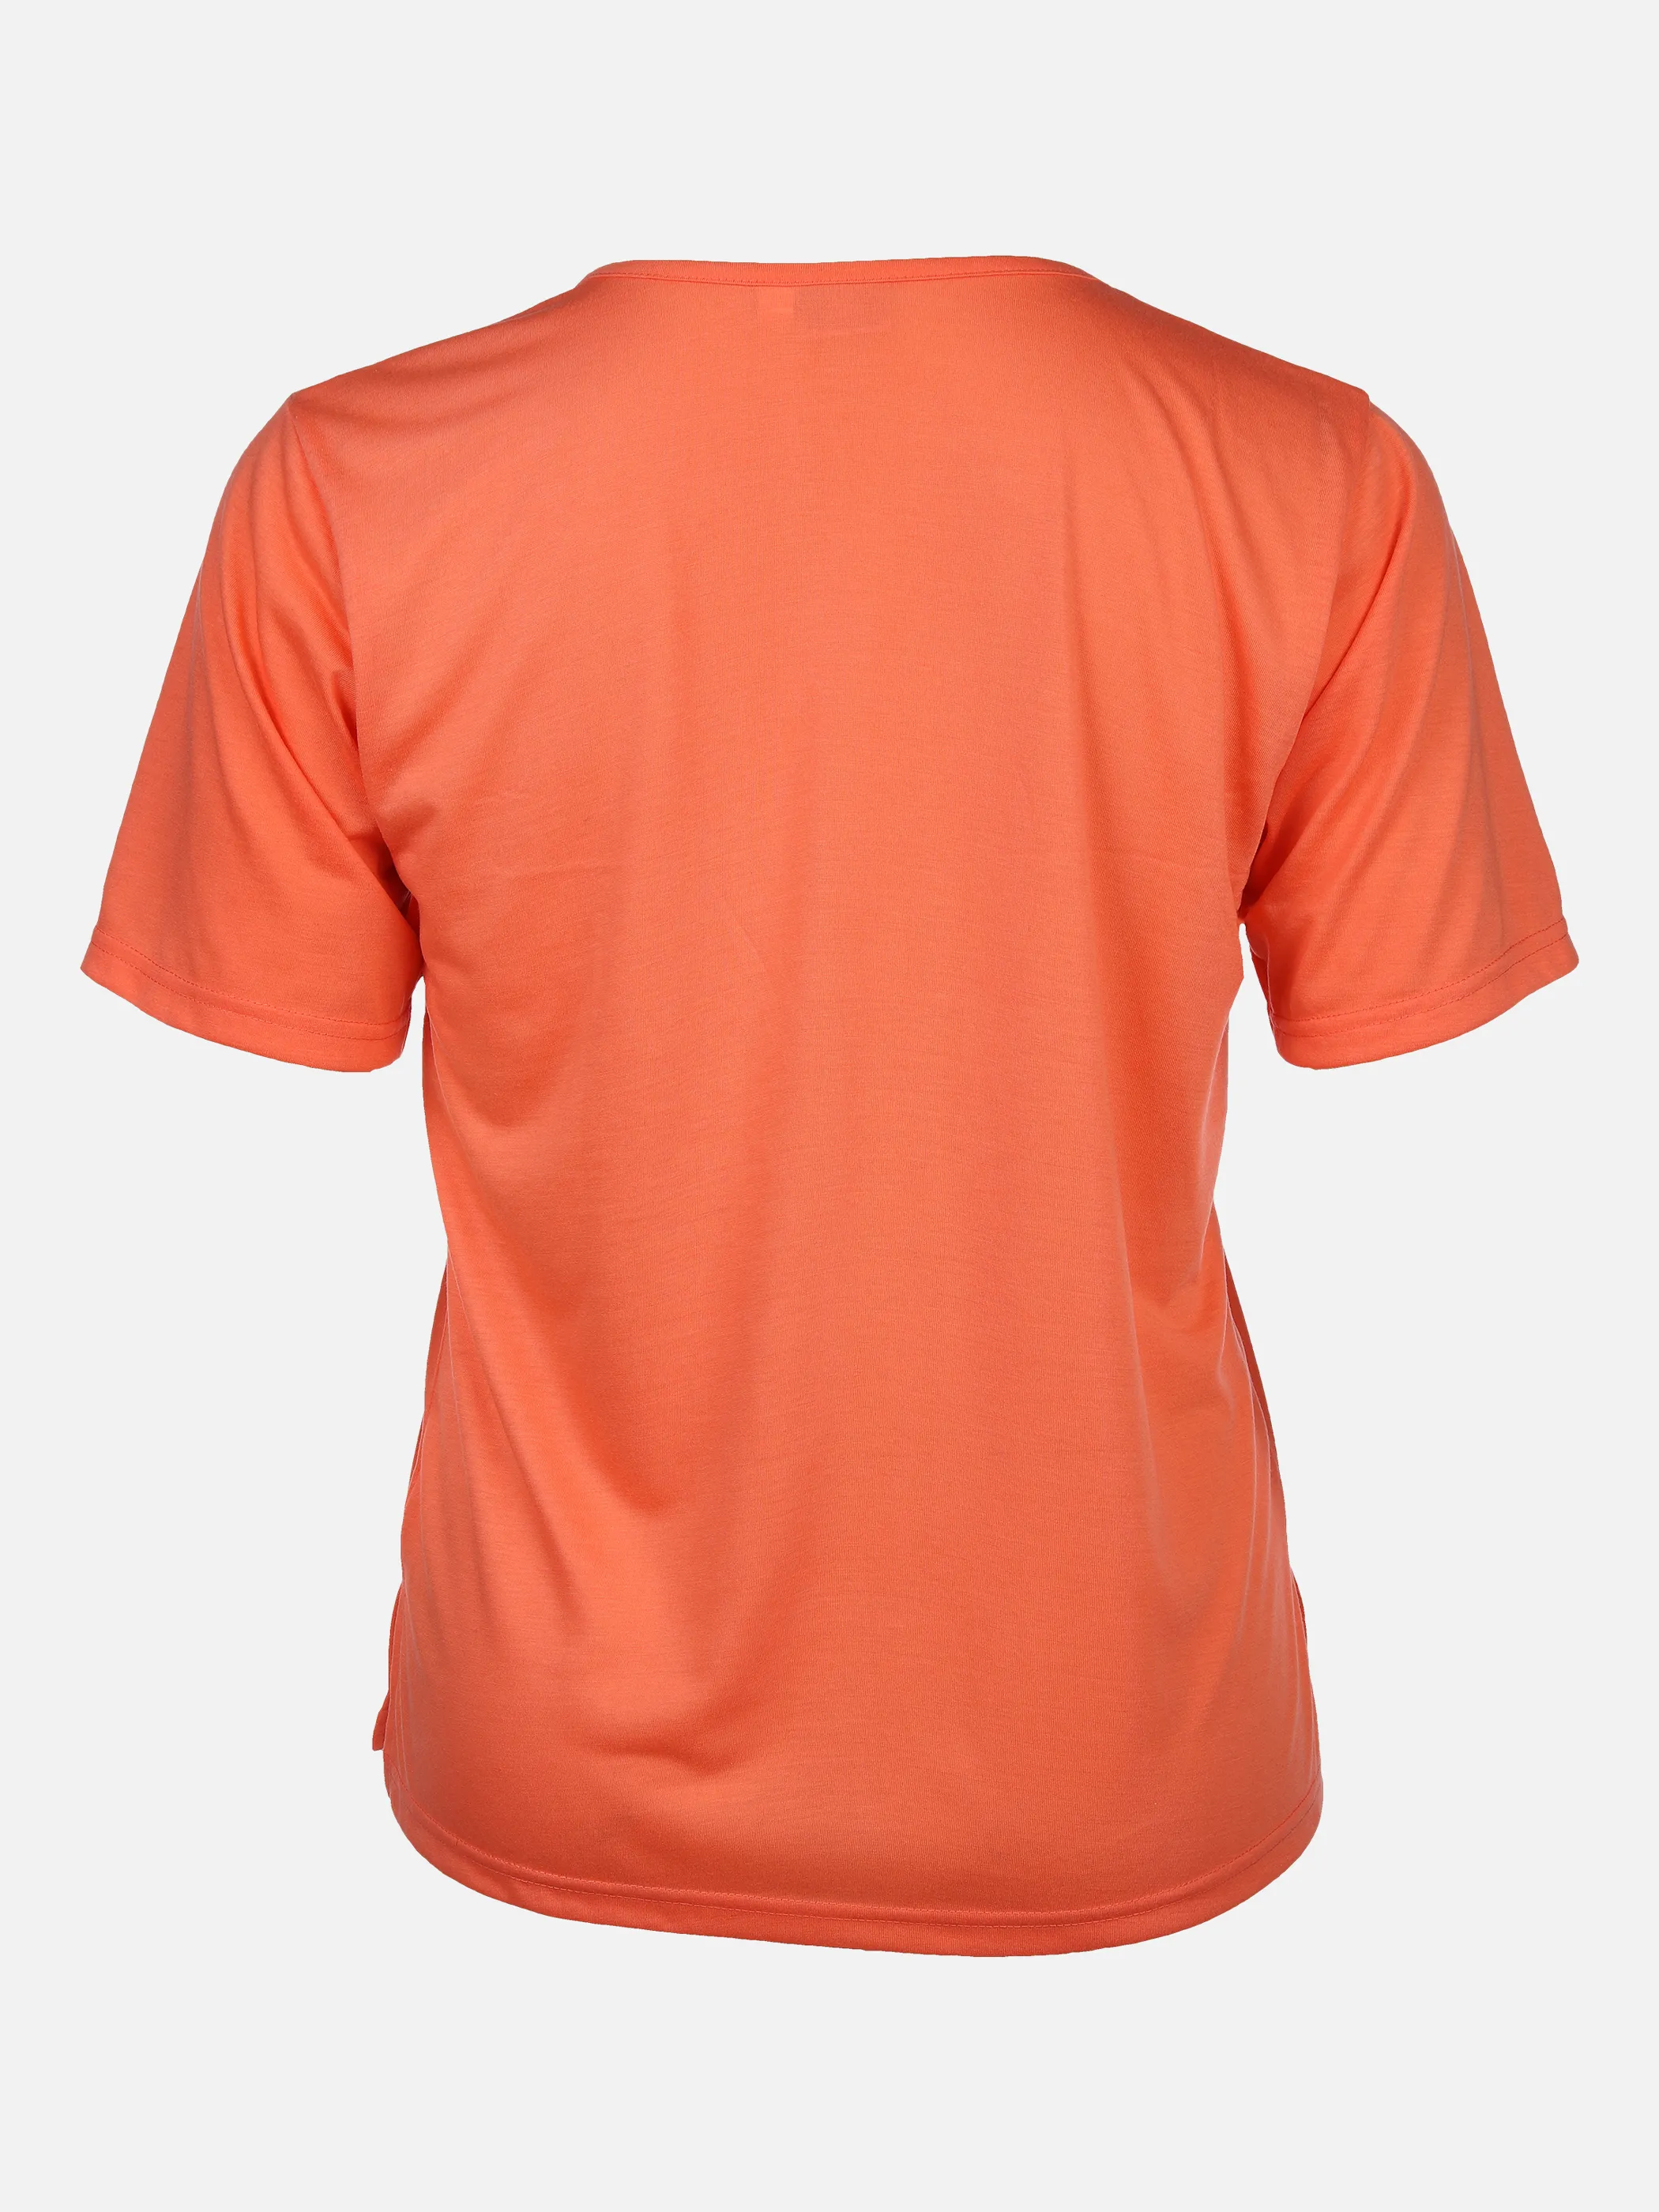 Sonja Blank Da-gr.Gr.T-Shirt m.Strassapplikation Orange 876189 KORALLE 2